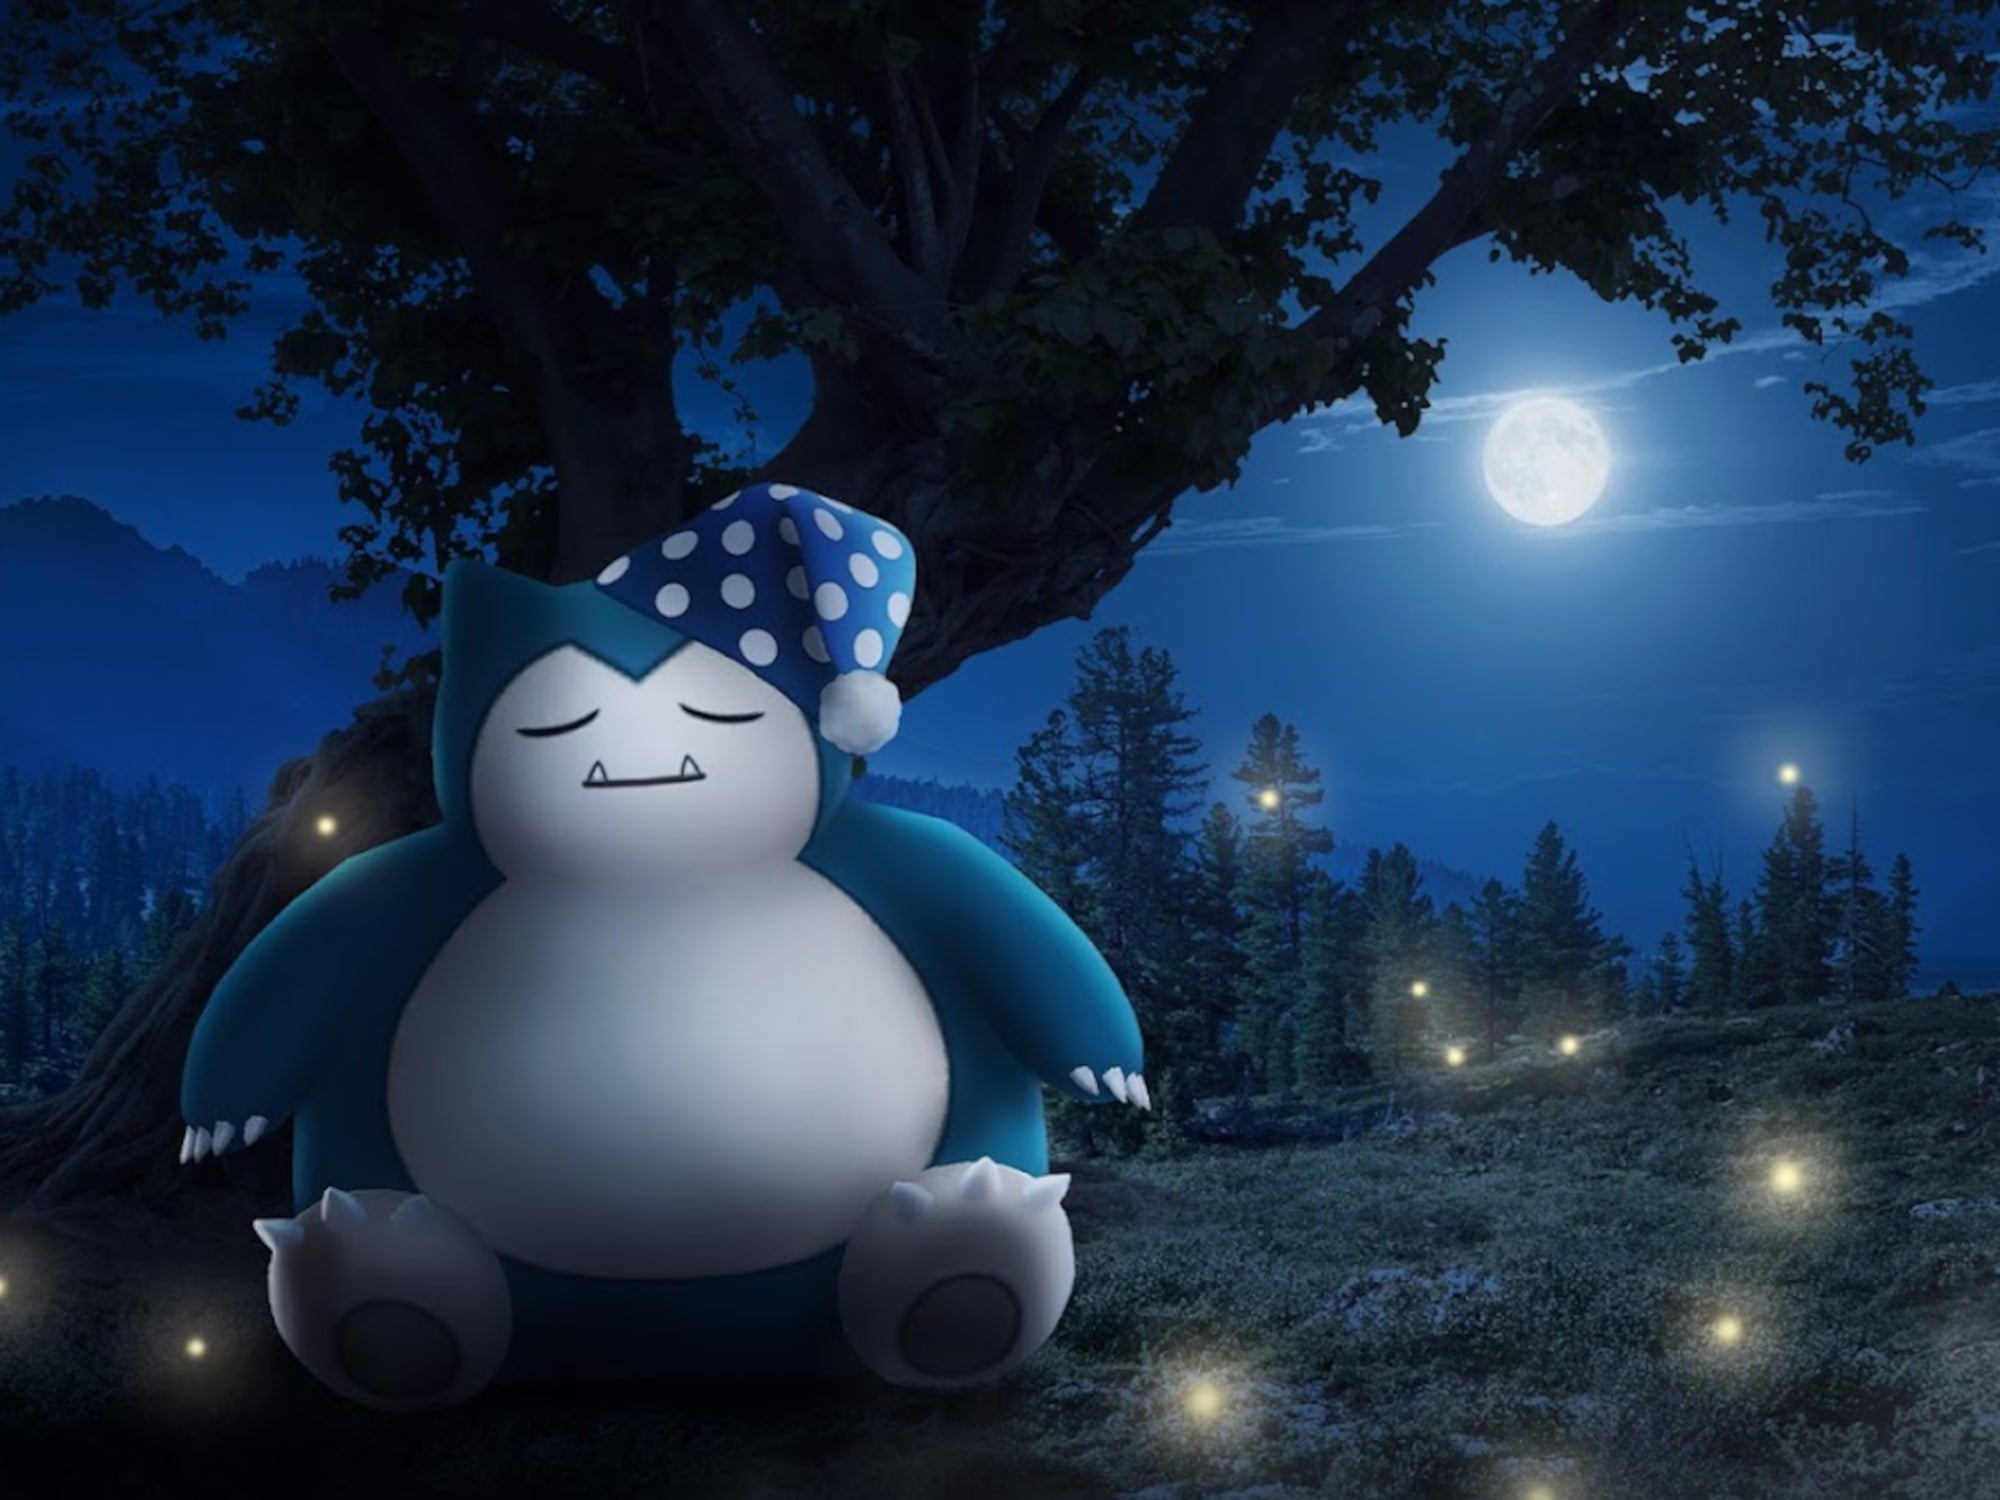 #Pokémon Sleep statt Pokémon Go: Komm schnapp sie dir – mal anders